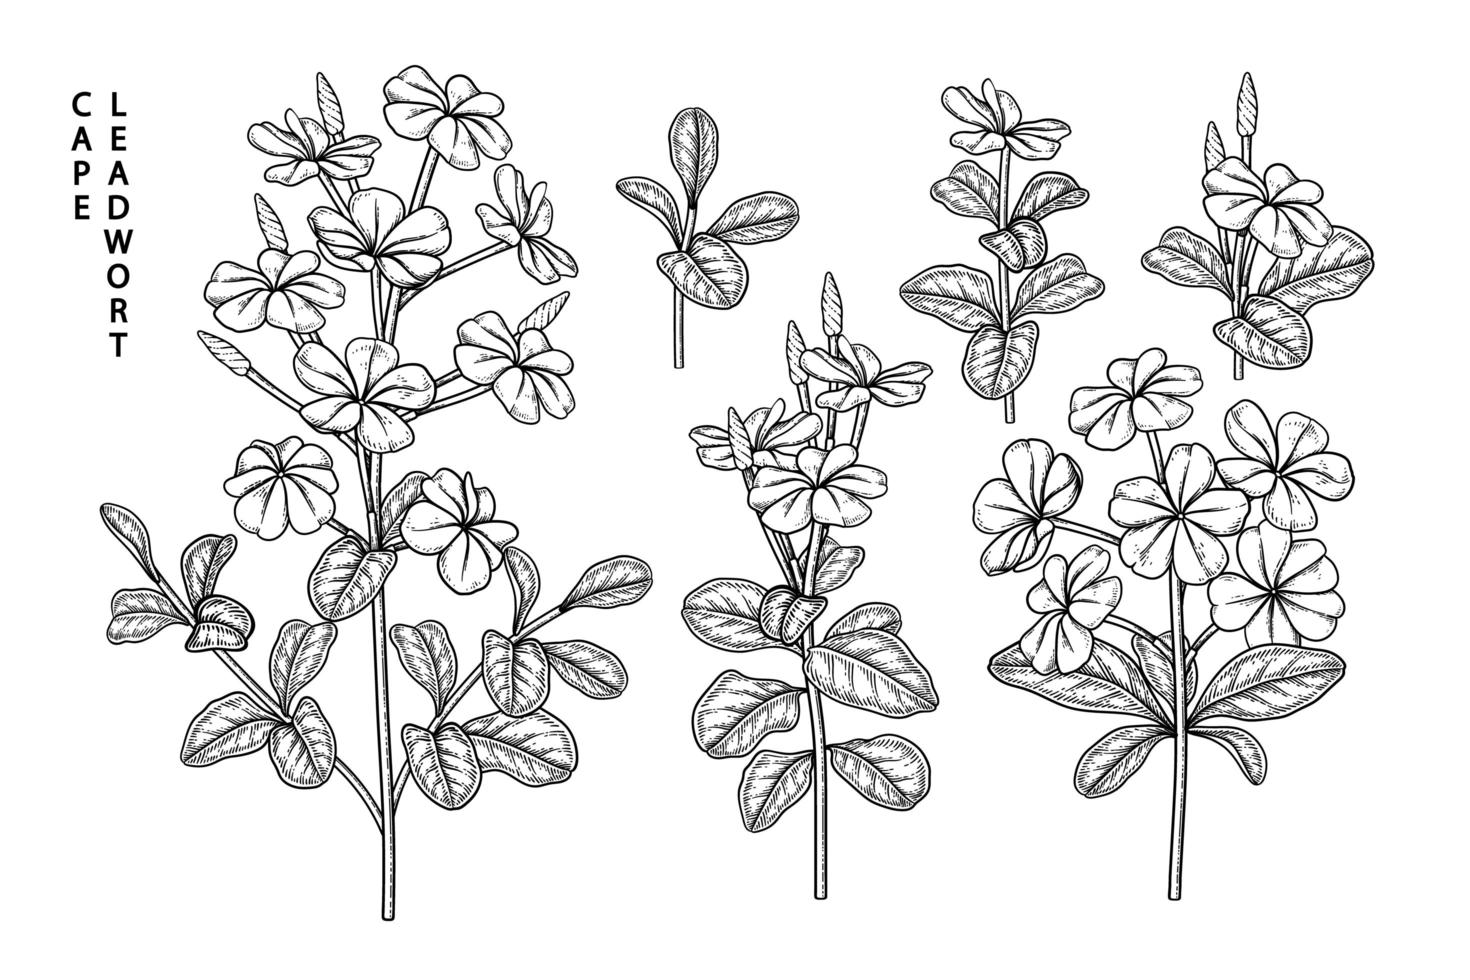 Plumbago auriculata or Cape Leadwort flower Hand Drawn Sketch Elements Botanical Illustrations Decorative set vector